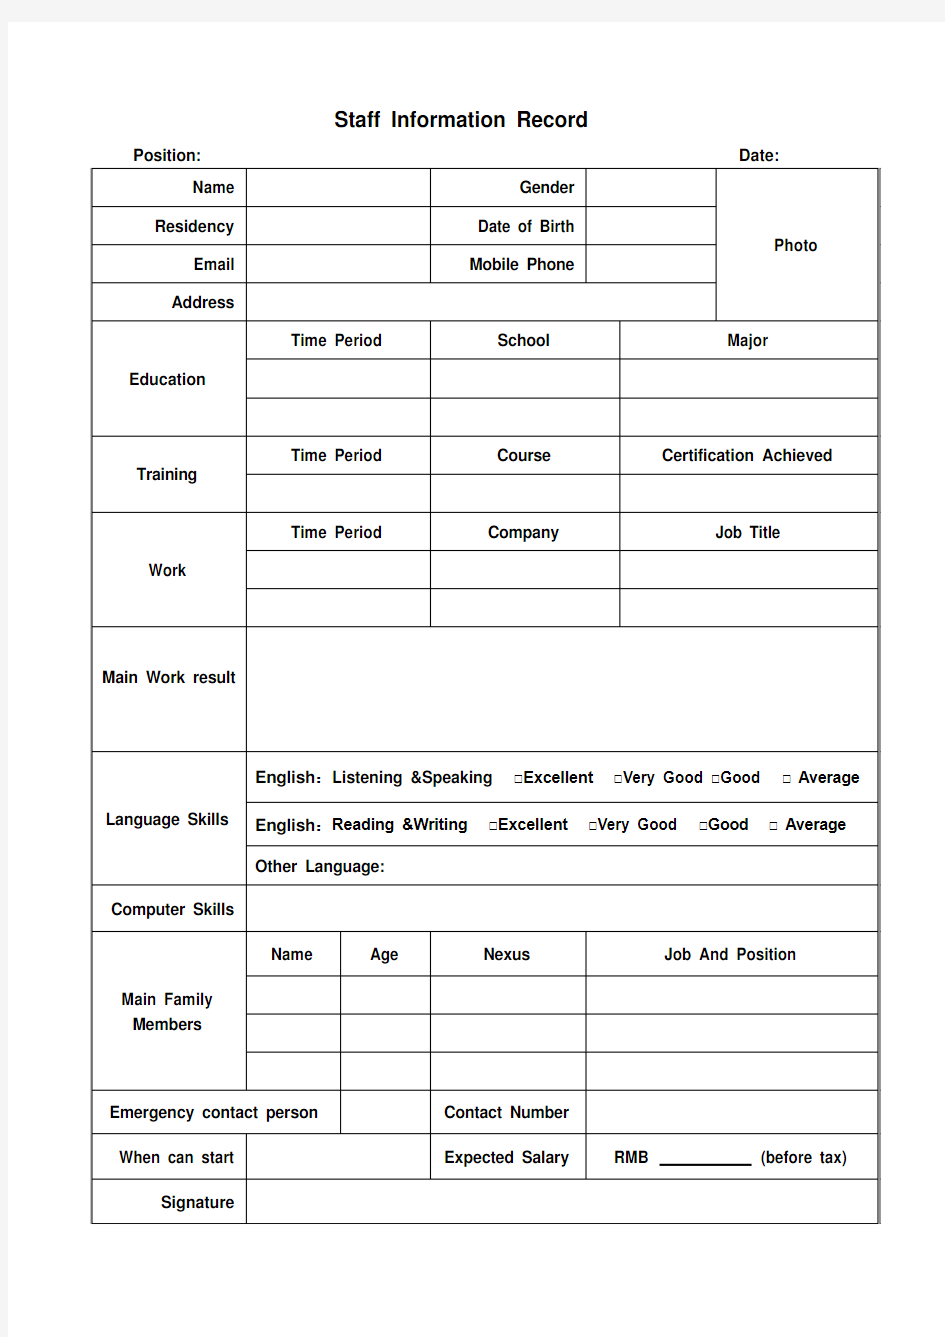 Staff Information Record form(员工信息登记表英文版)